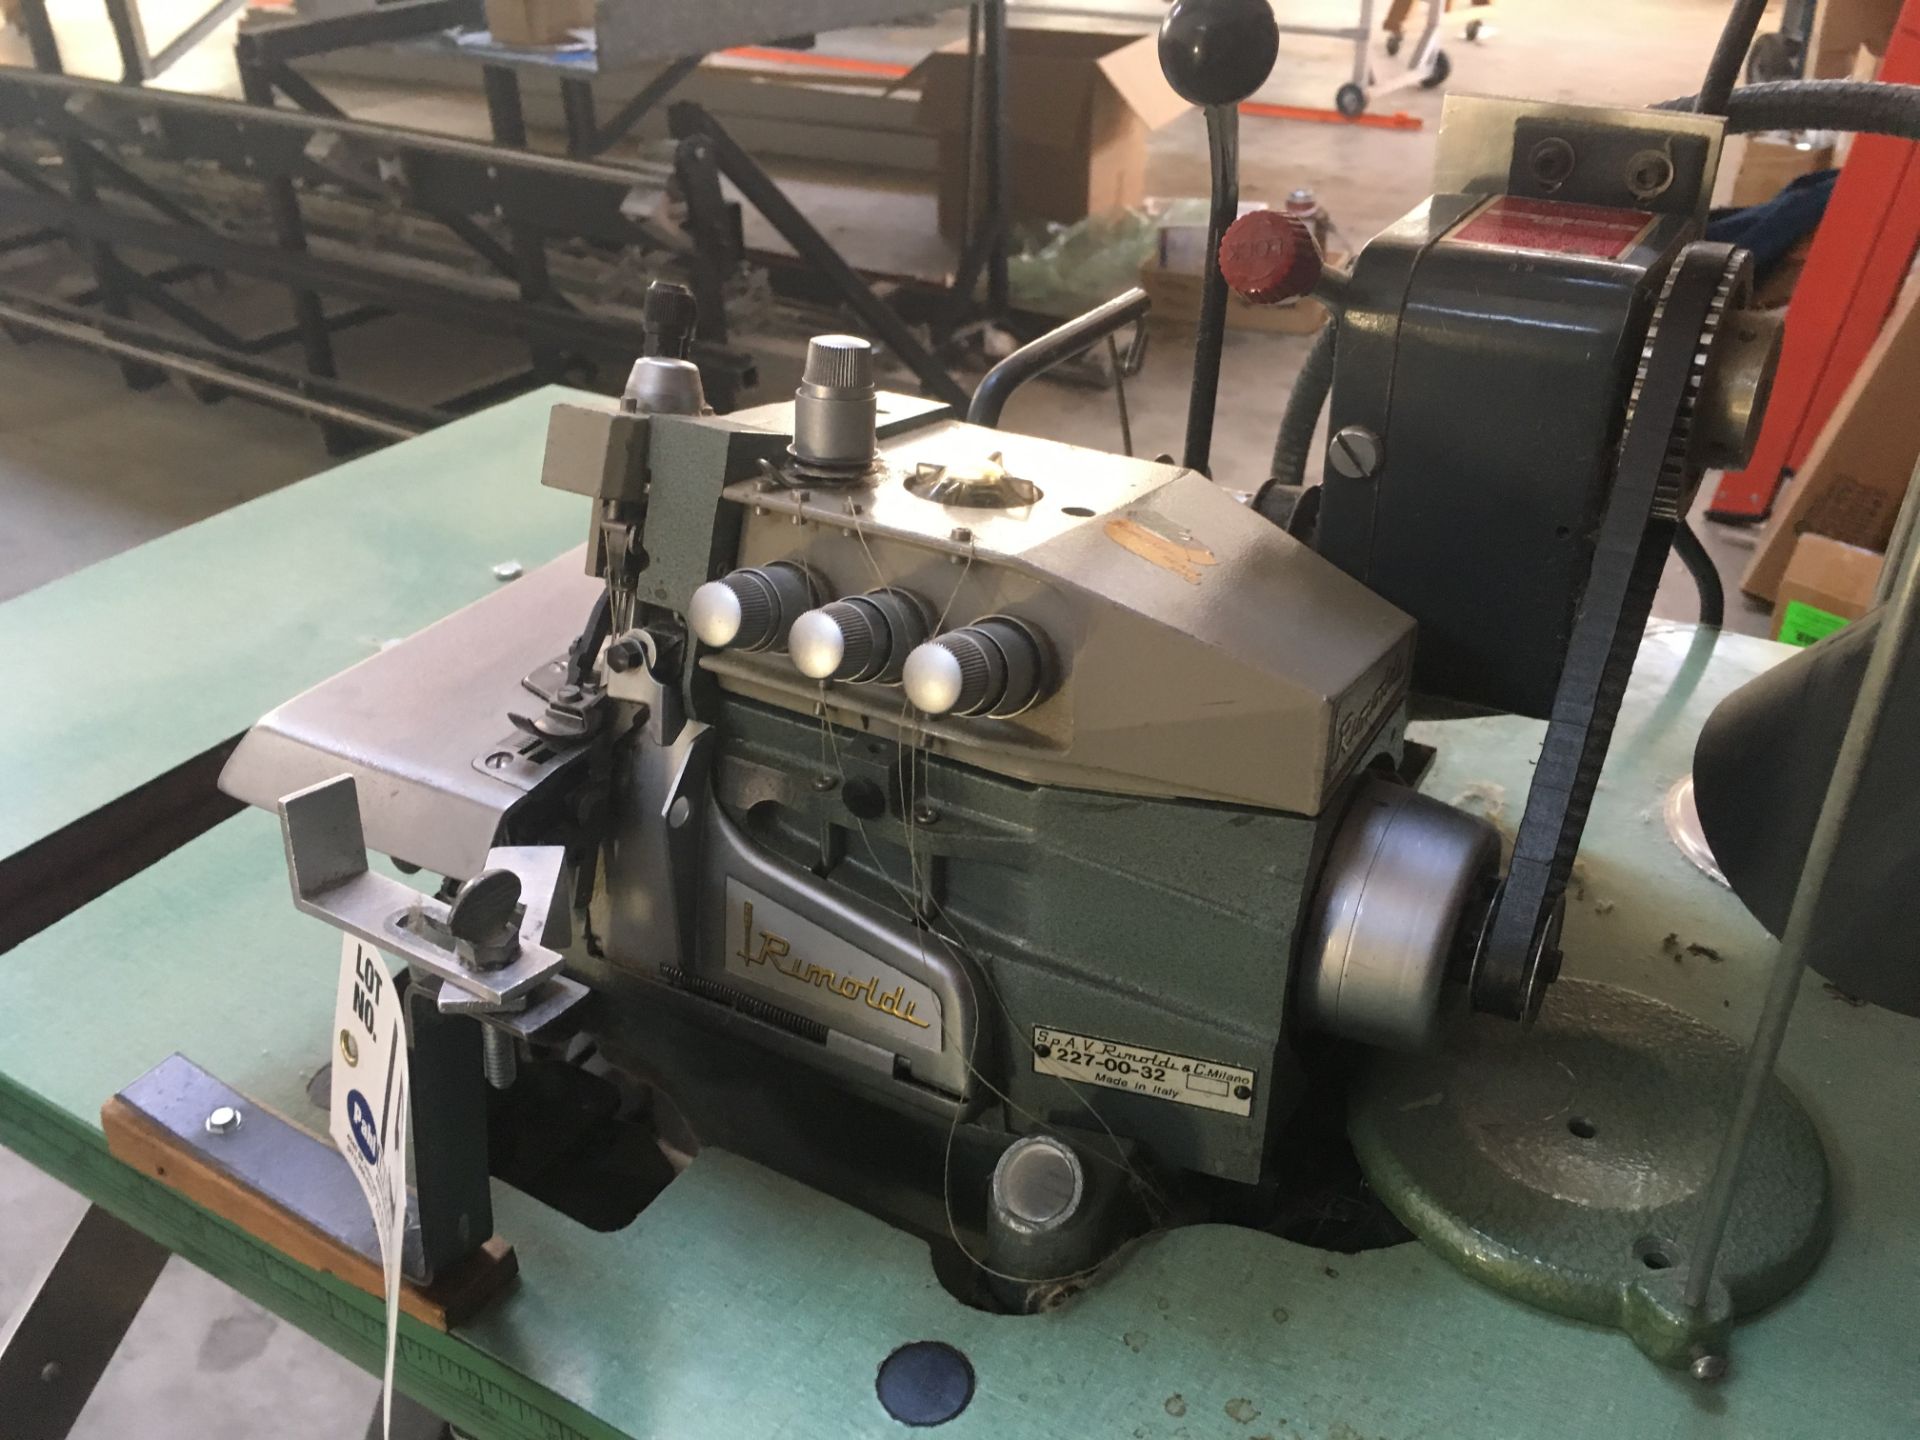 Rimoldi 227-00-32 Serger Sewing Machine - Image 3 of 3